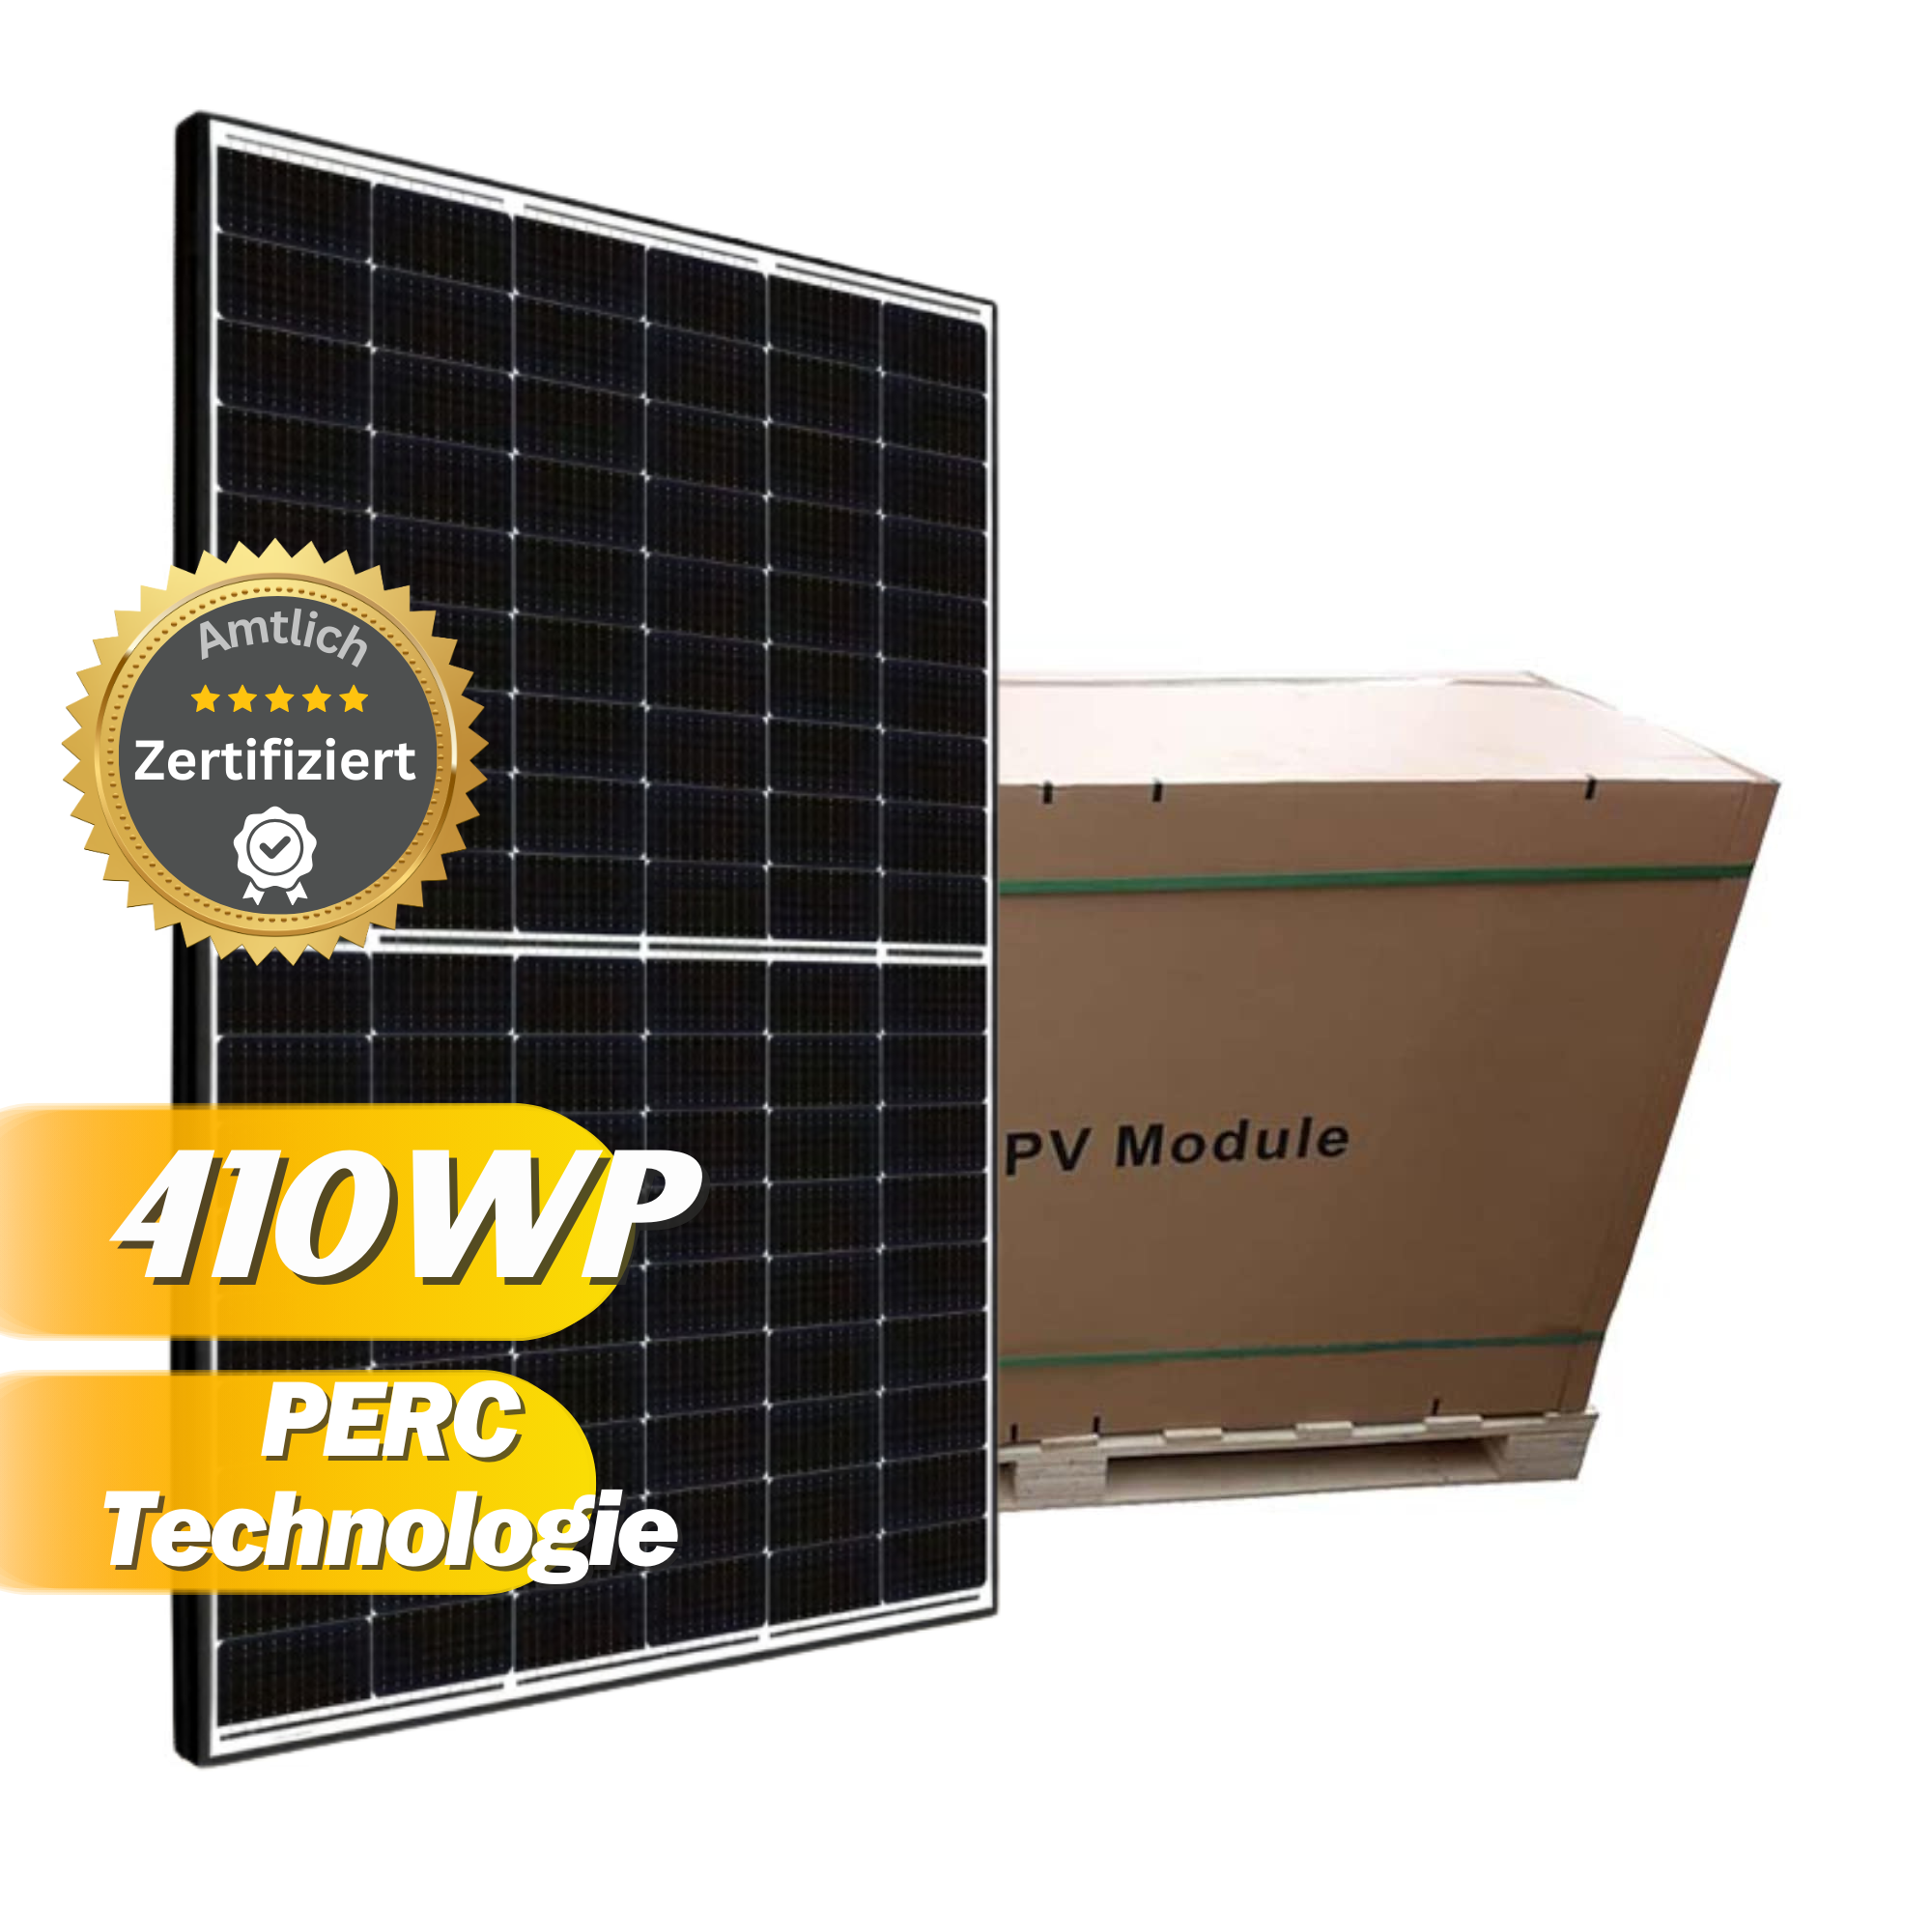 Solarmodul 410Wp Canadian Solar HiKu6 Mono PERC auf Palette zu 35 Stück